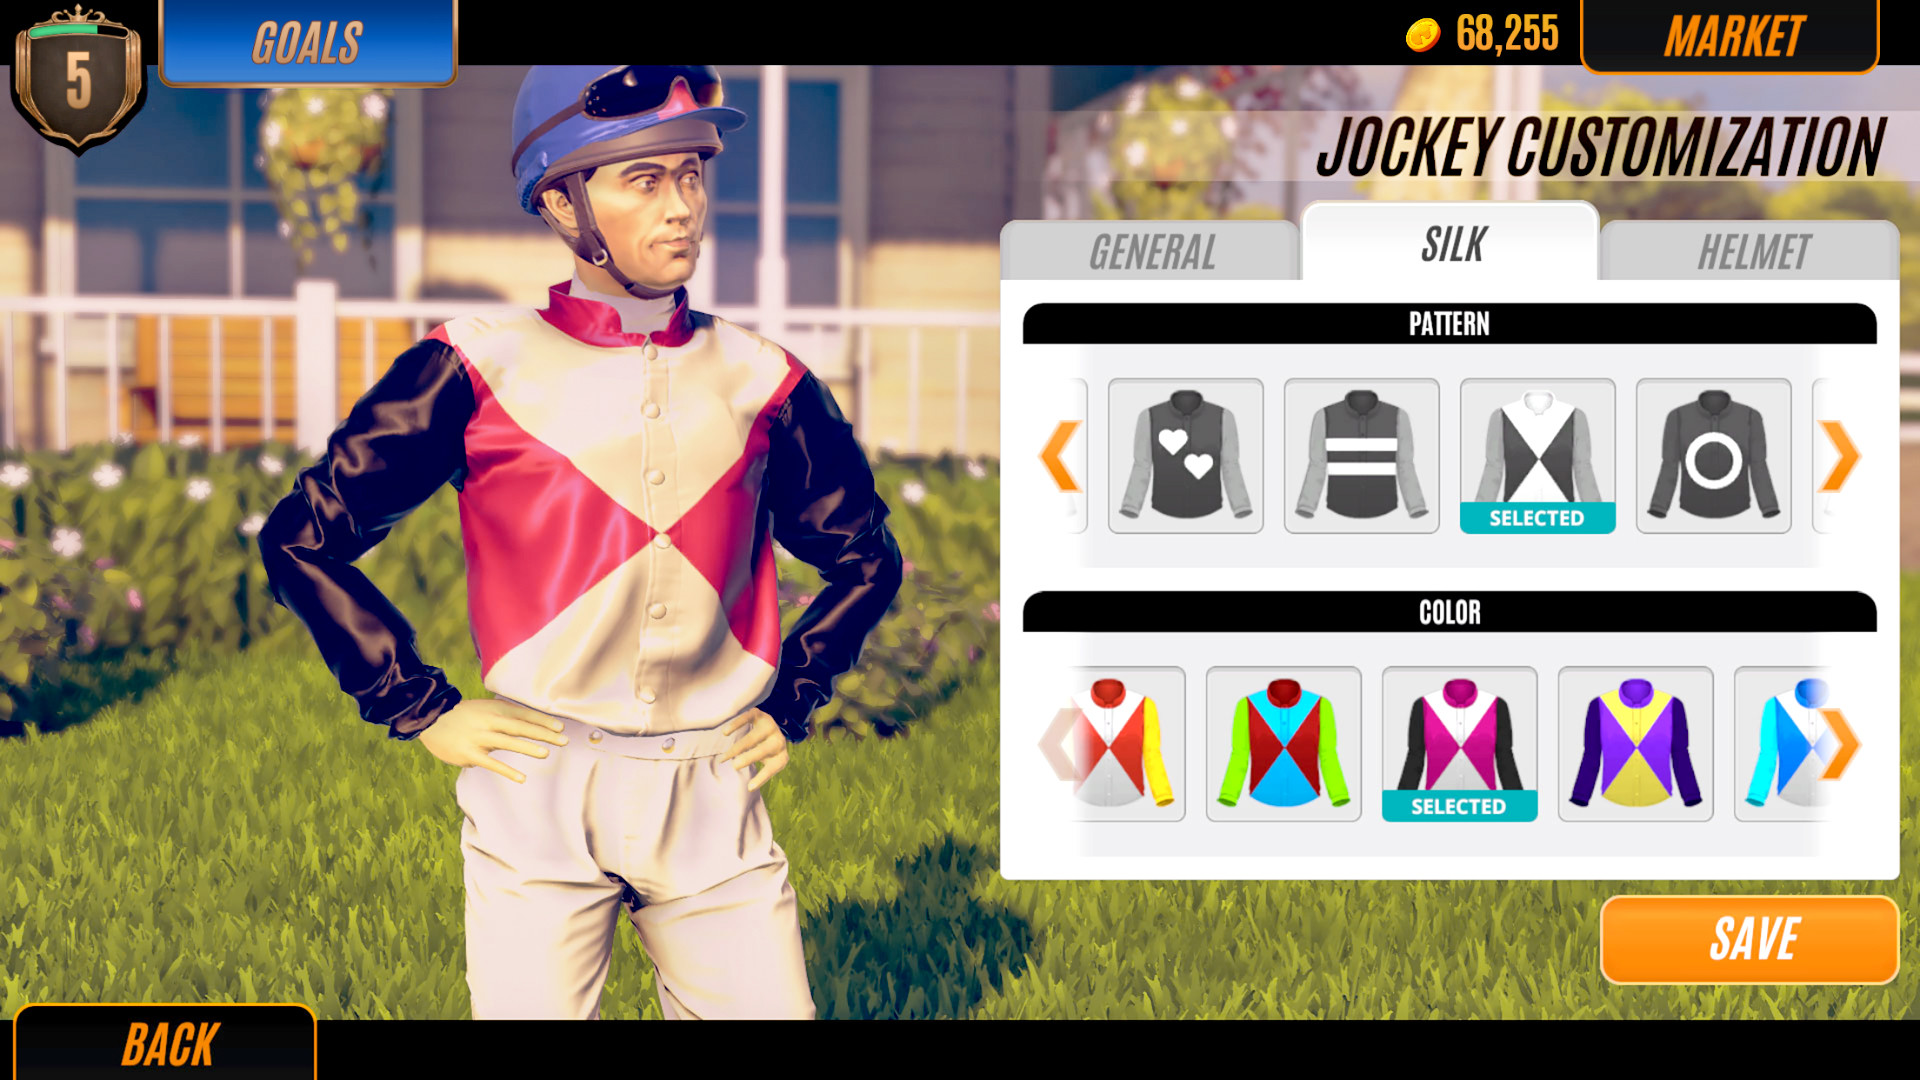 Rival Stars Horse Racing: Desktop Edition Free Download